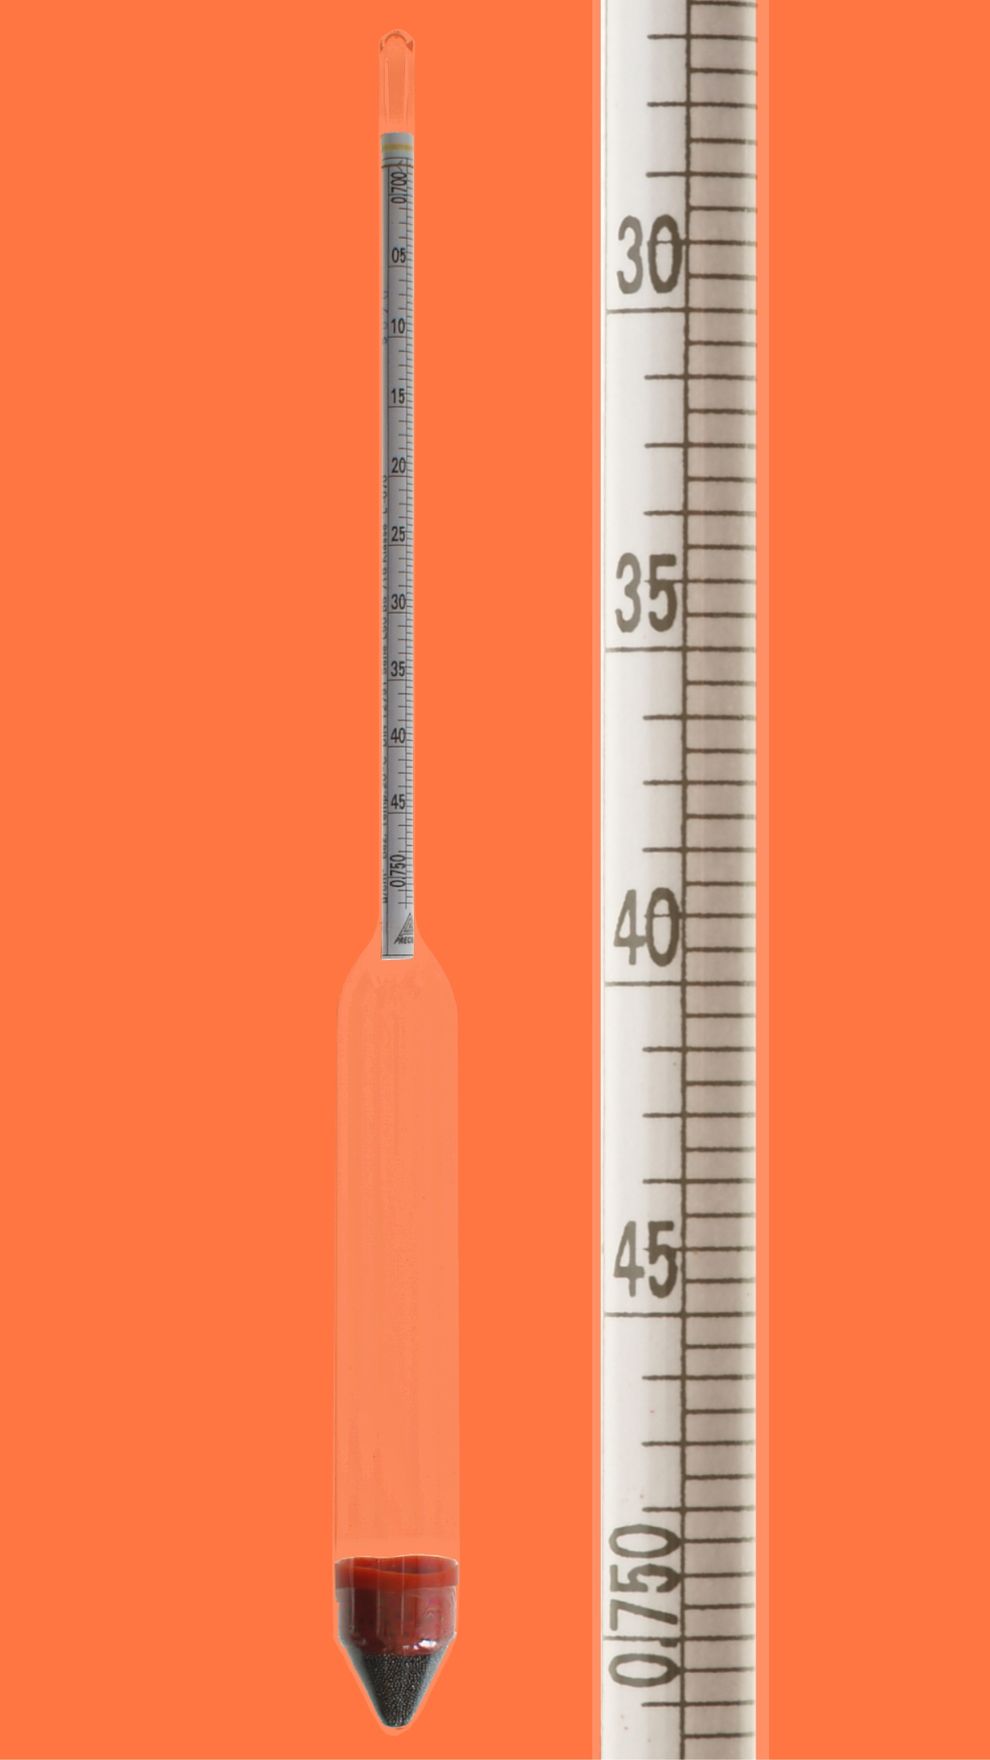 Aräometer, DIN 12791, L50, 1,90-1,95:0,0005g/cm³, Bezugstemp. 20°C, ohne Thermometer